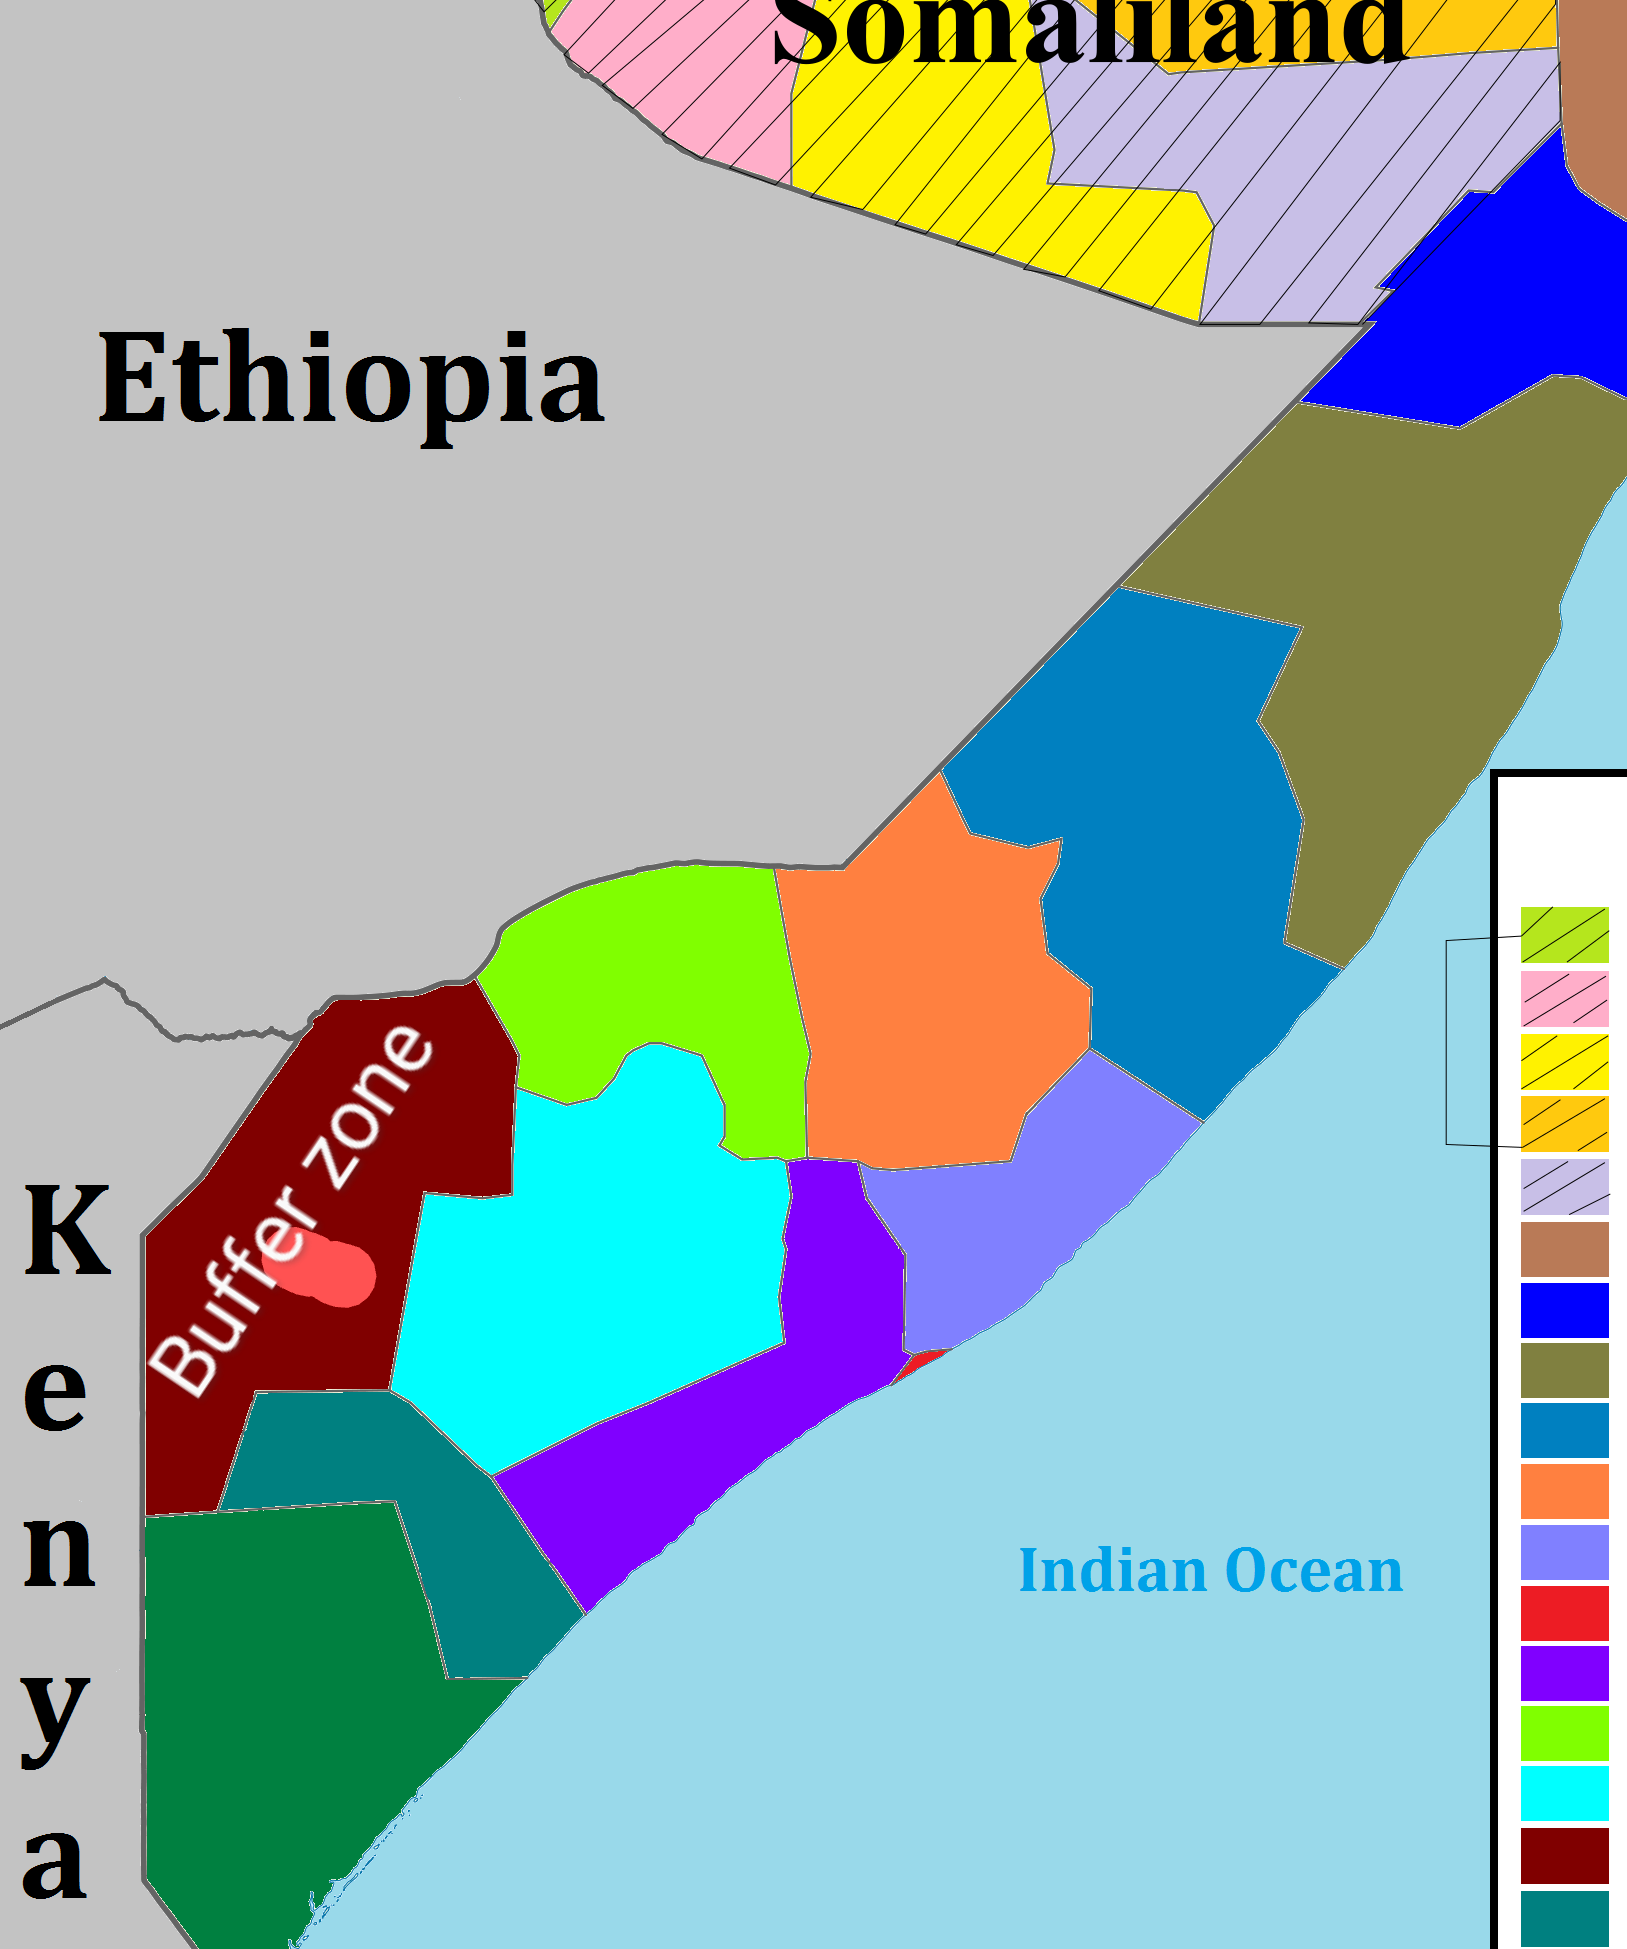 A_map_of_Somalia_regions~3.png